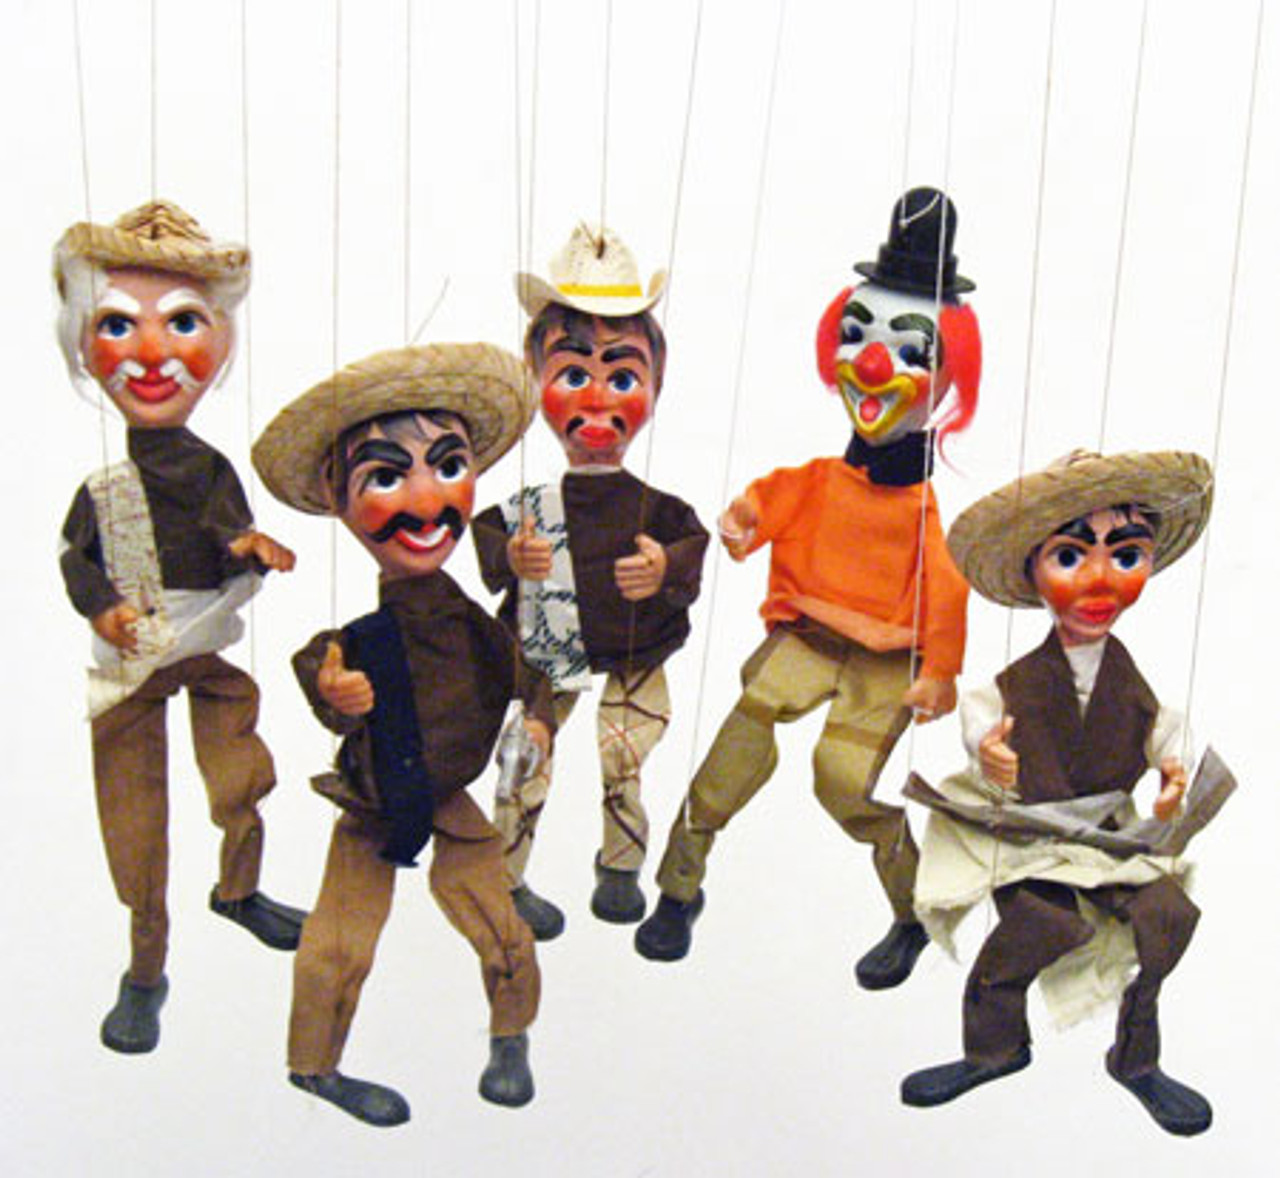 marionette doll